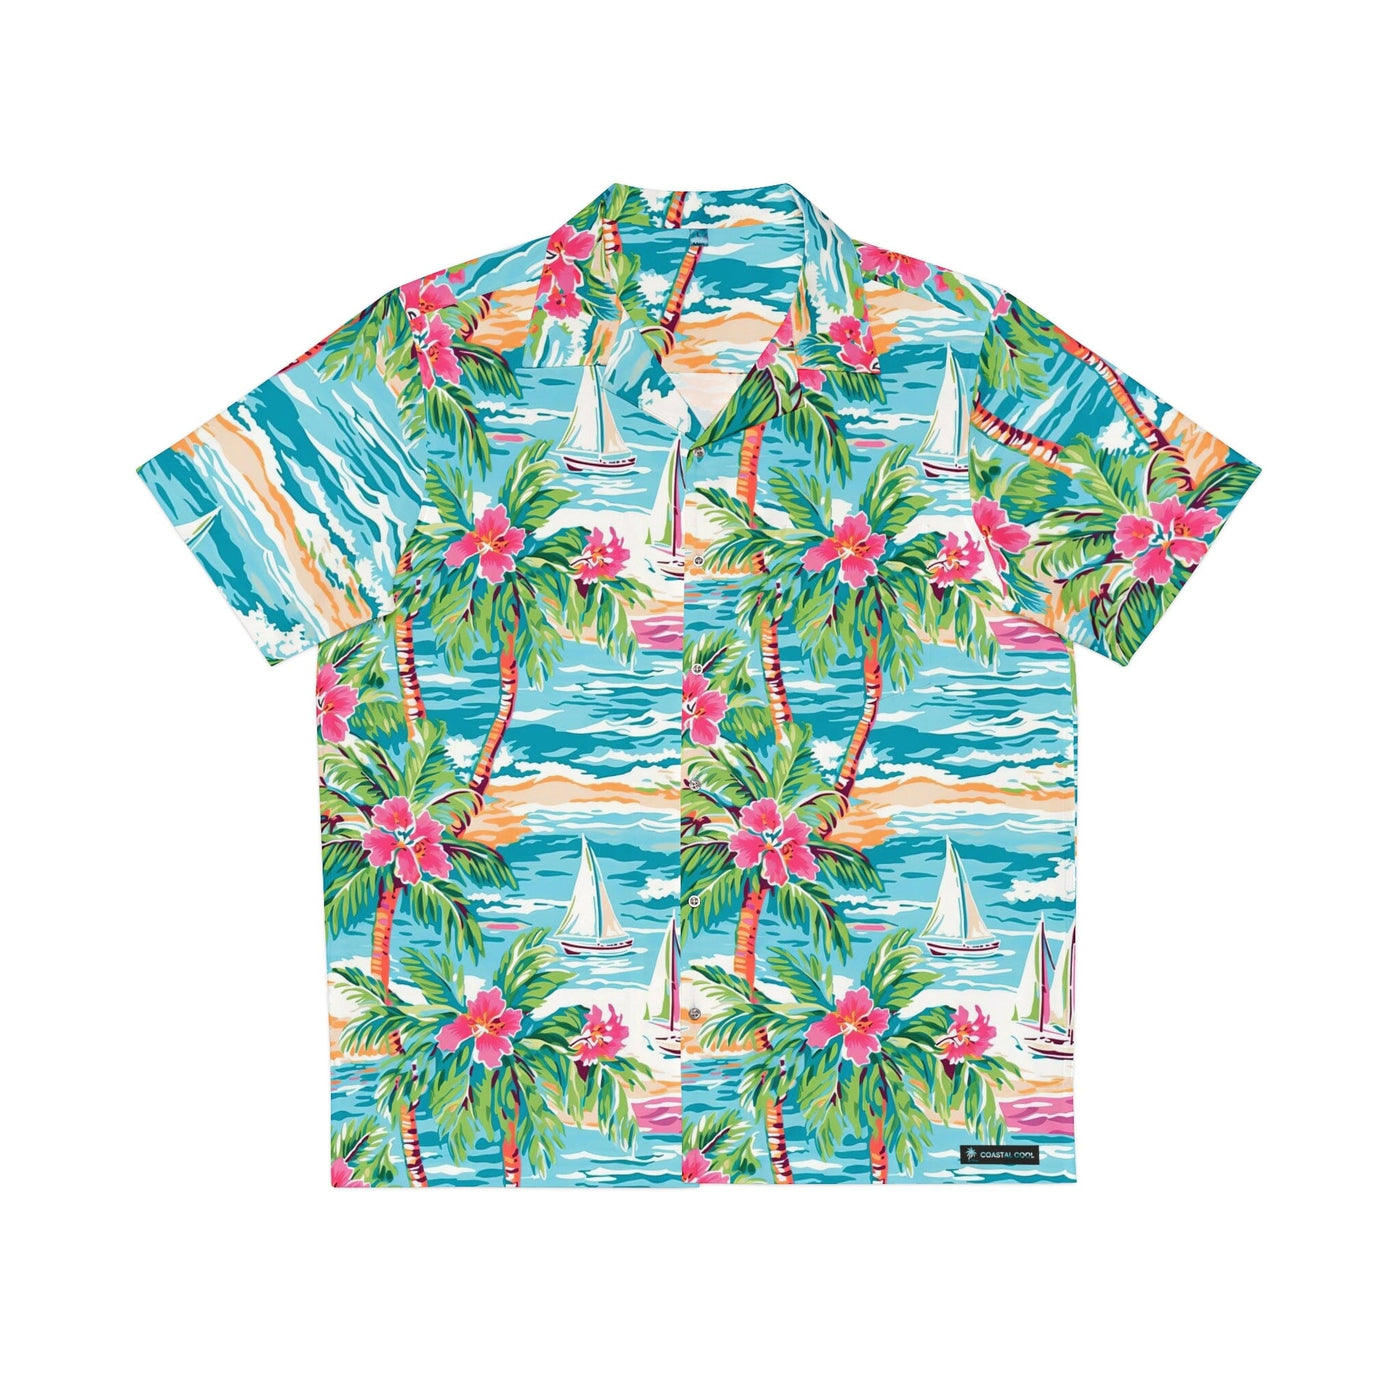 Cancun Short Sleeve - Coastal Cool - Swimwear and Beachwear - Recycled fabrics